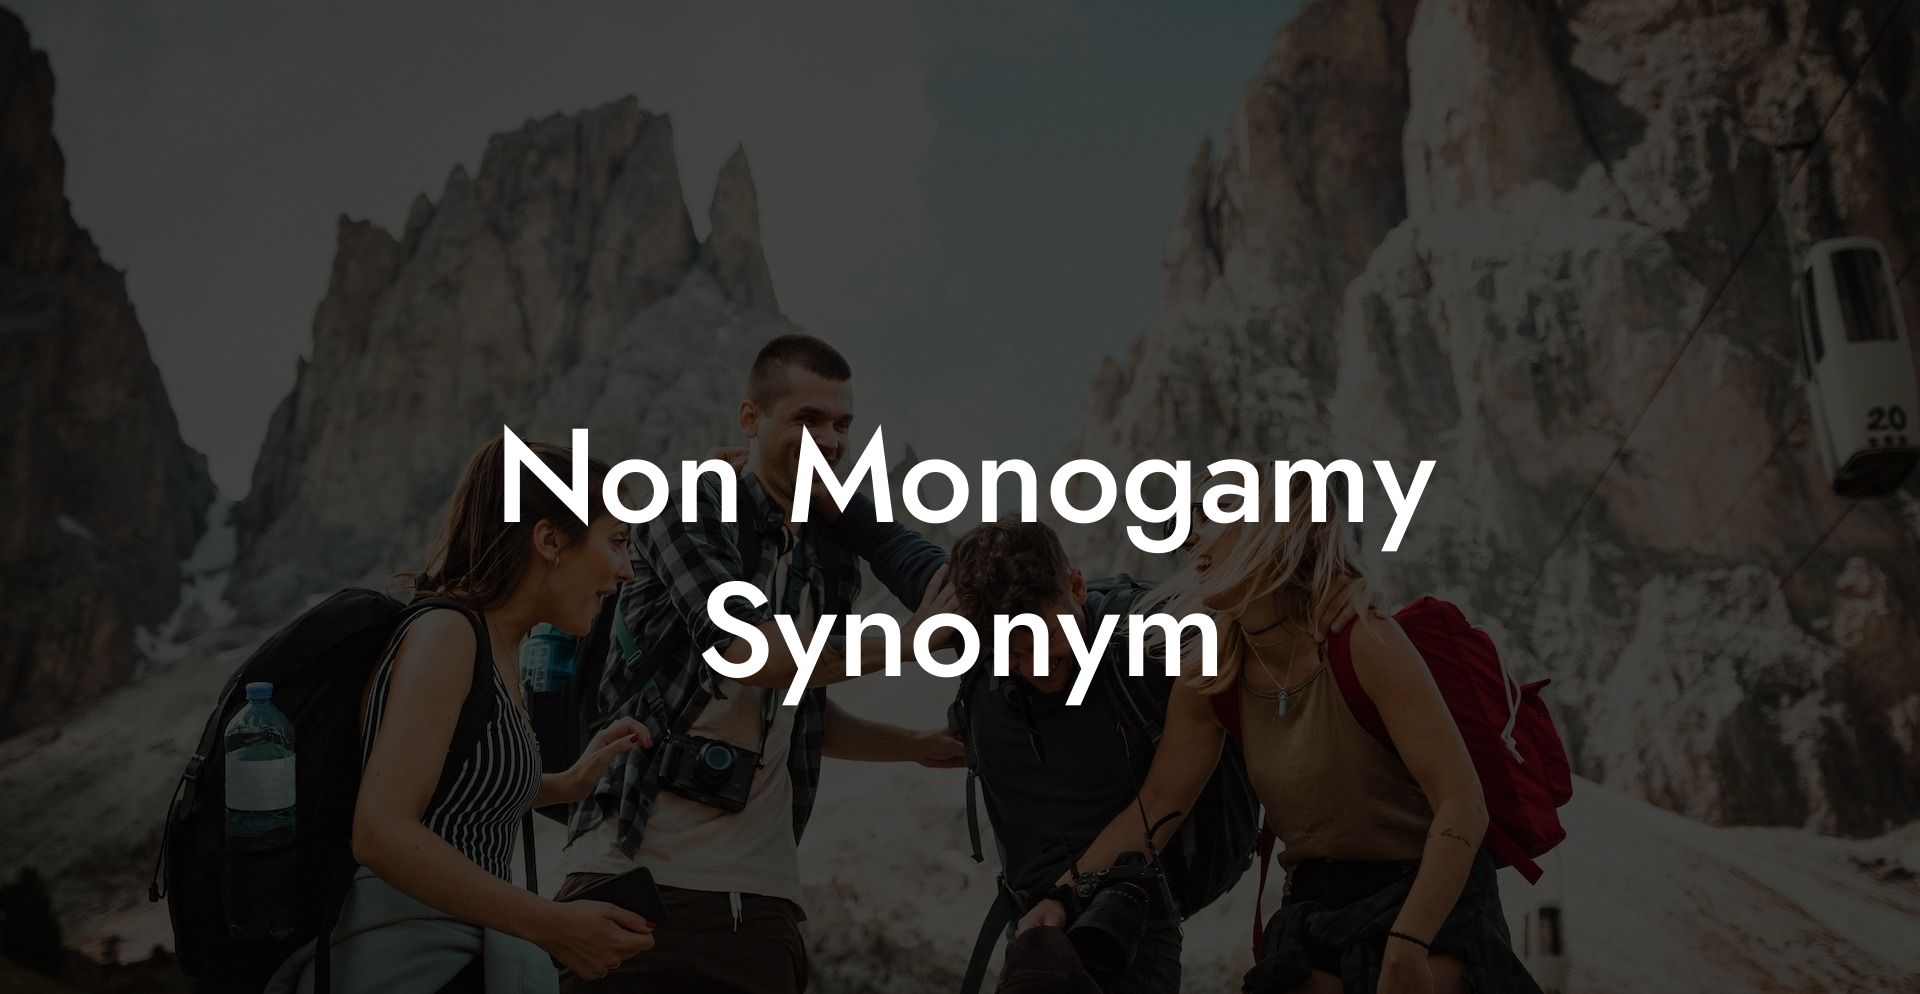 Non Monogamy Synonym